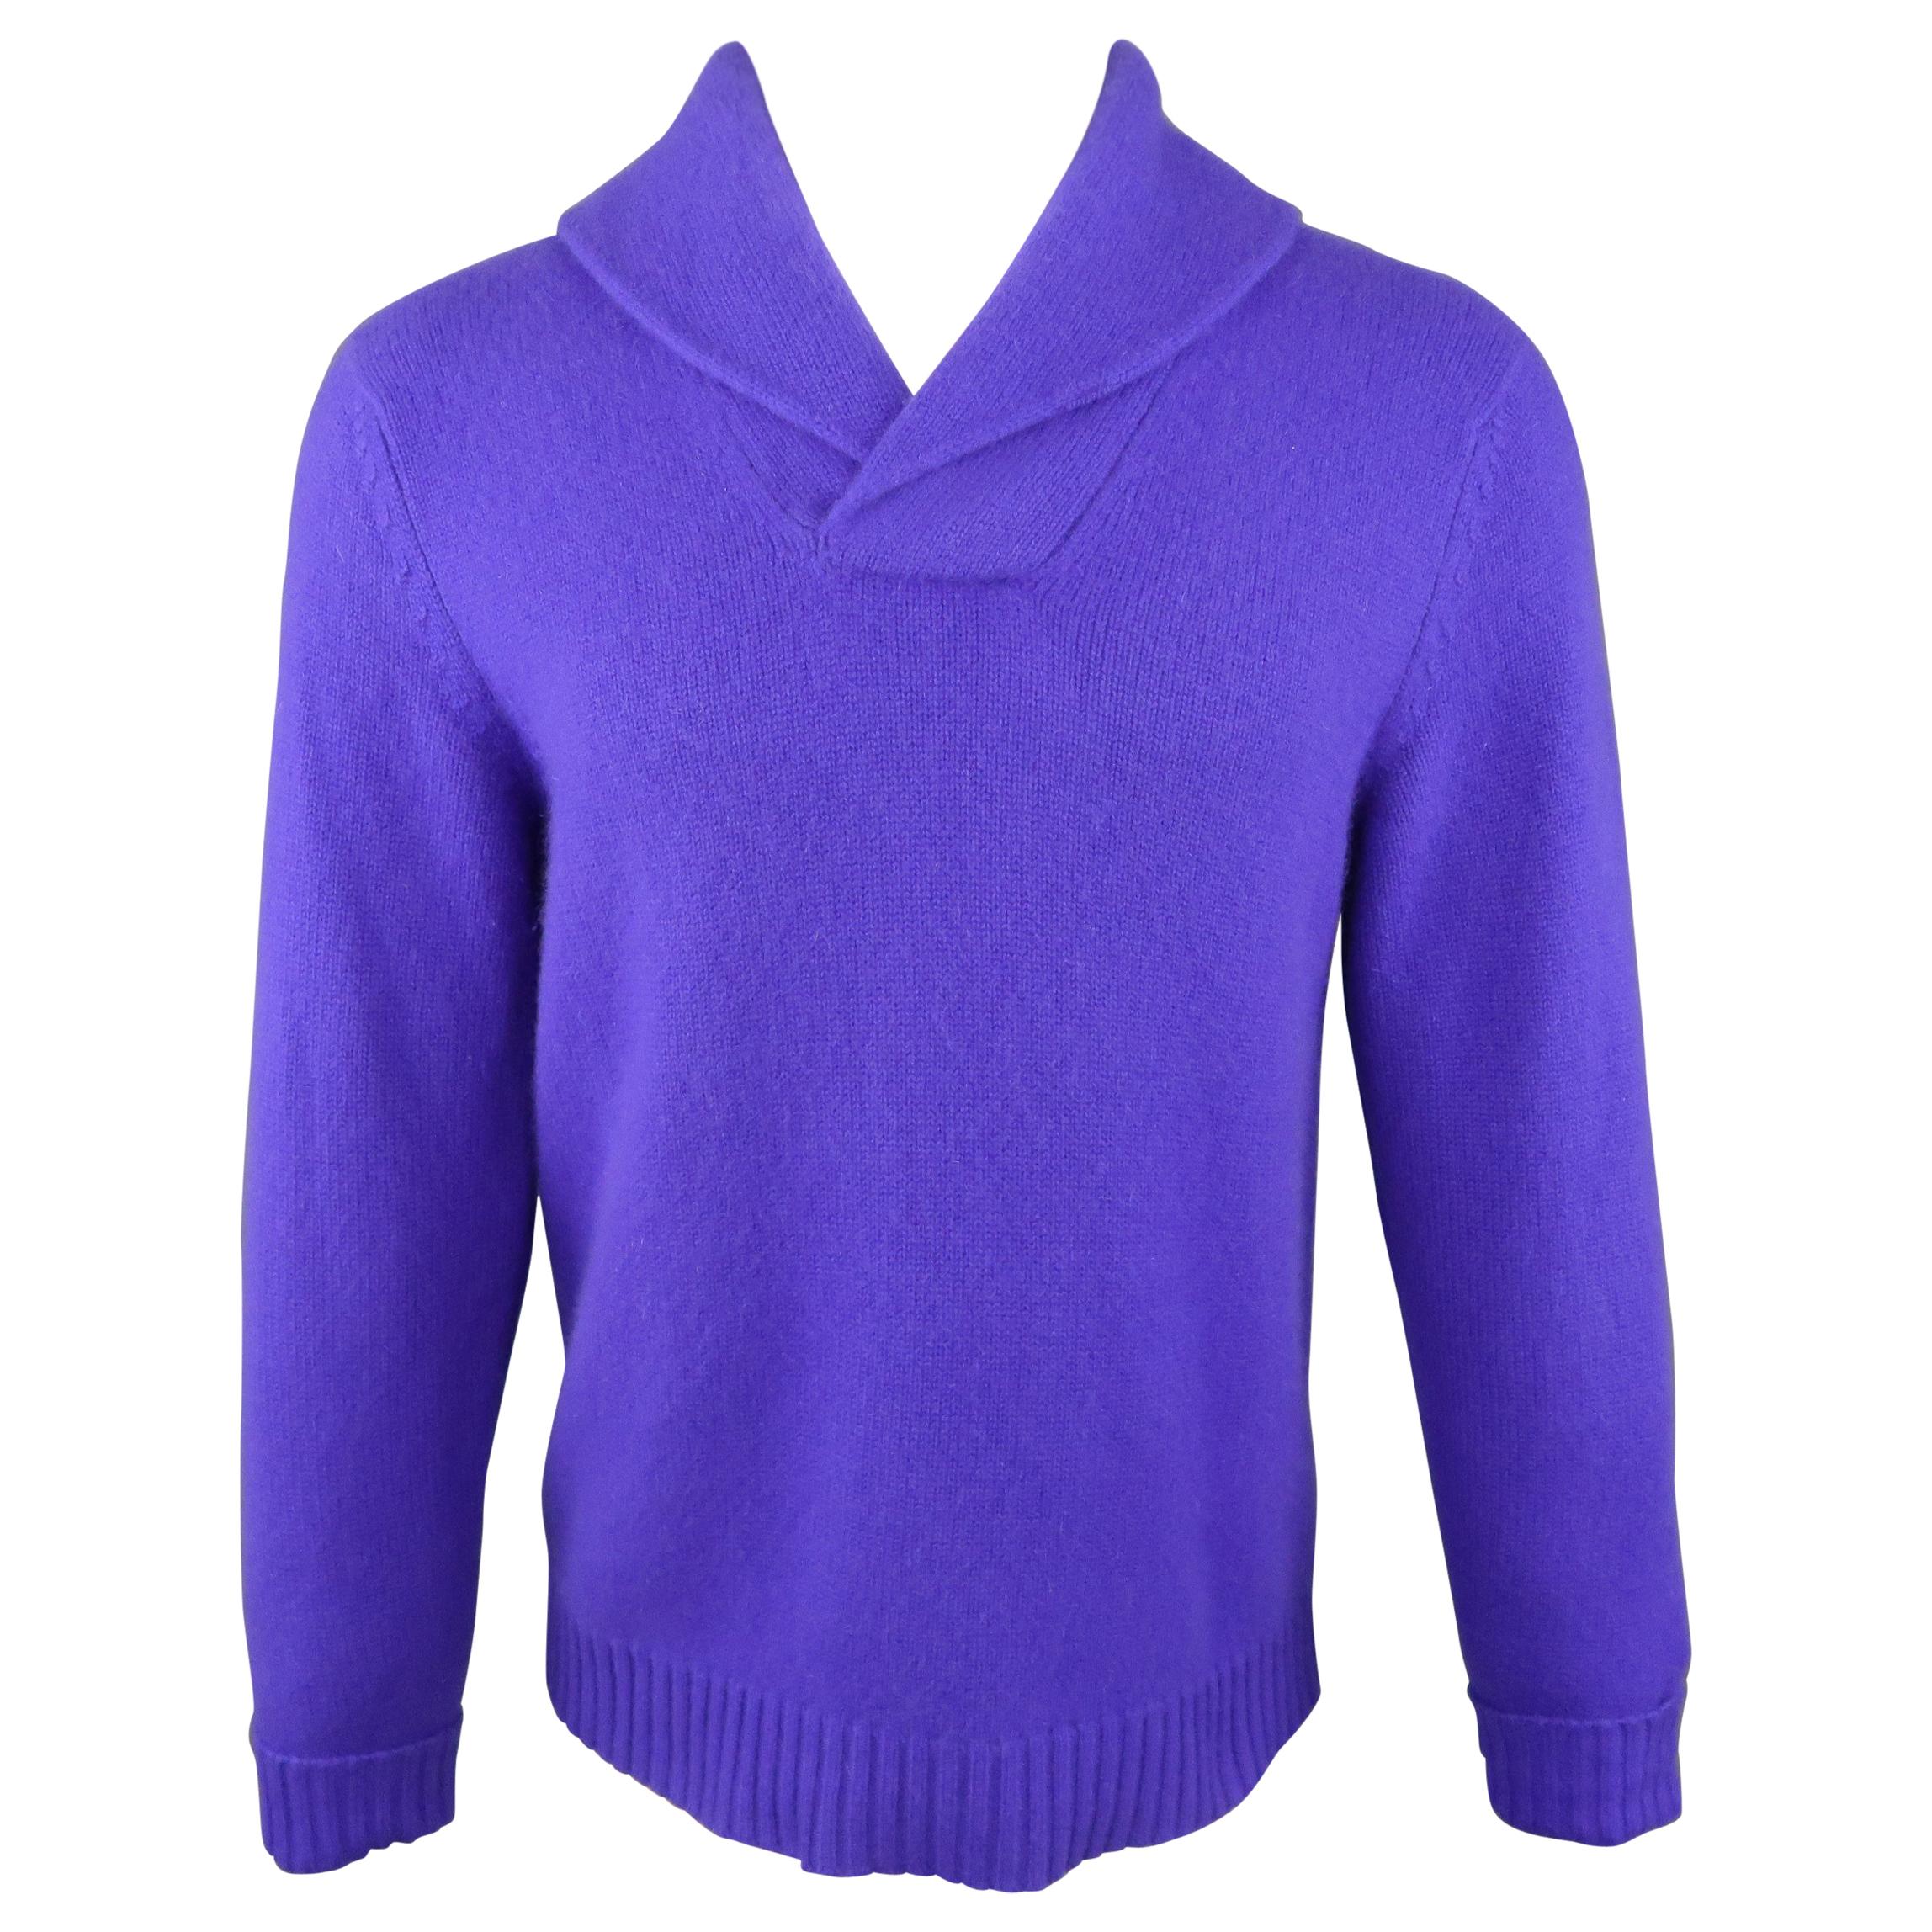 RALPH LAUREN Size M Purple Cashmere Shawl Collar Pullover Sweater